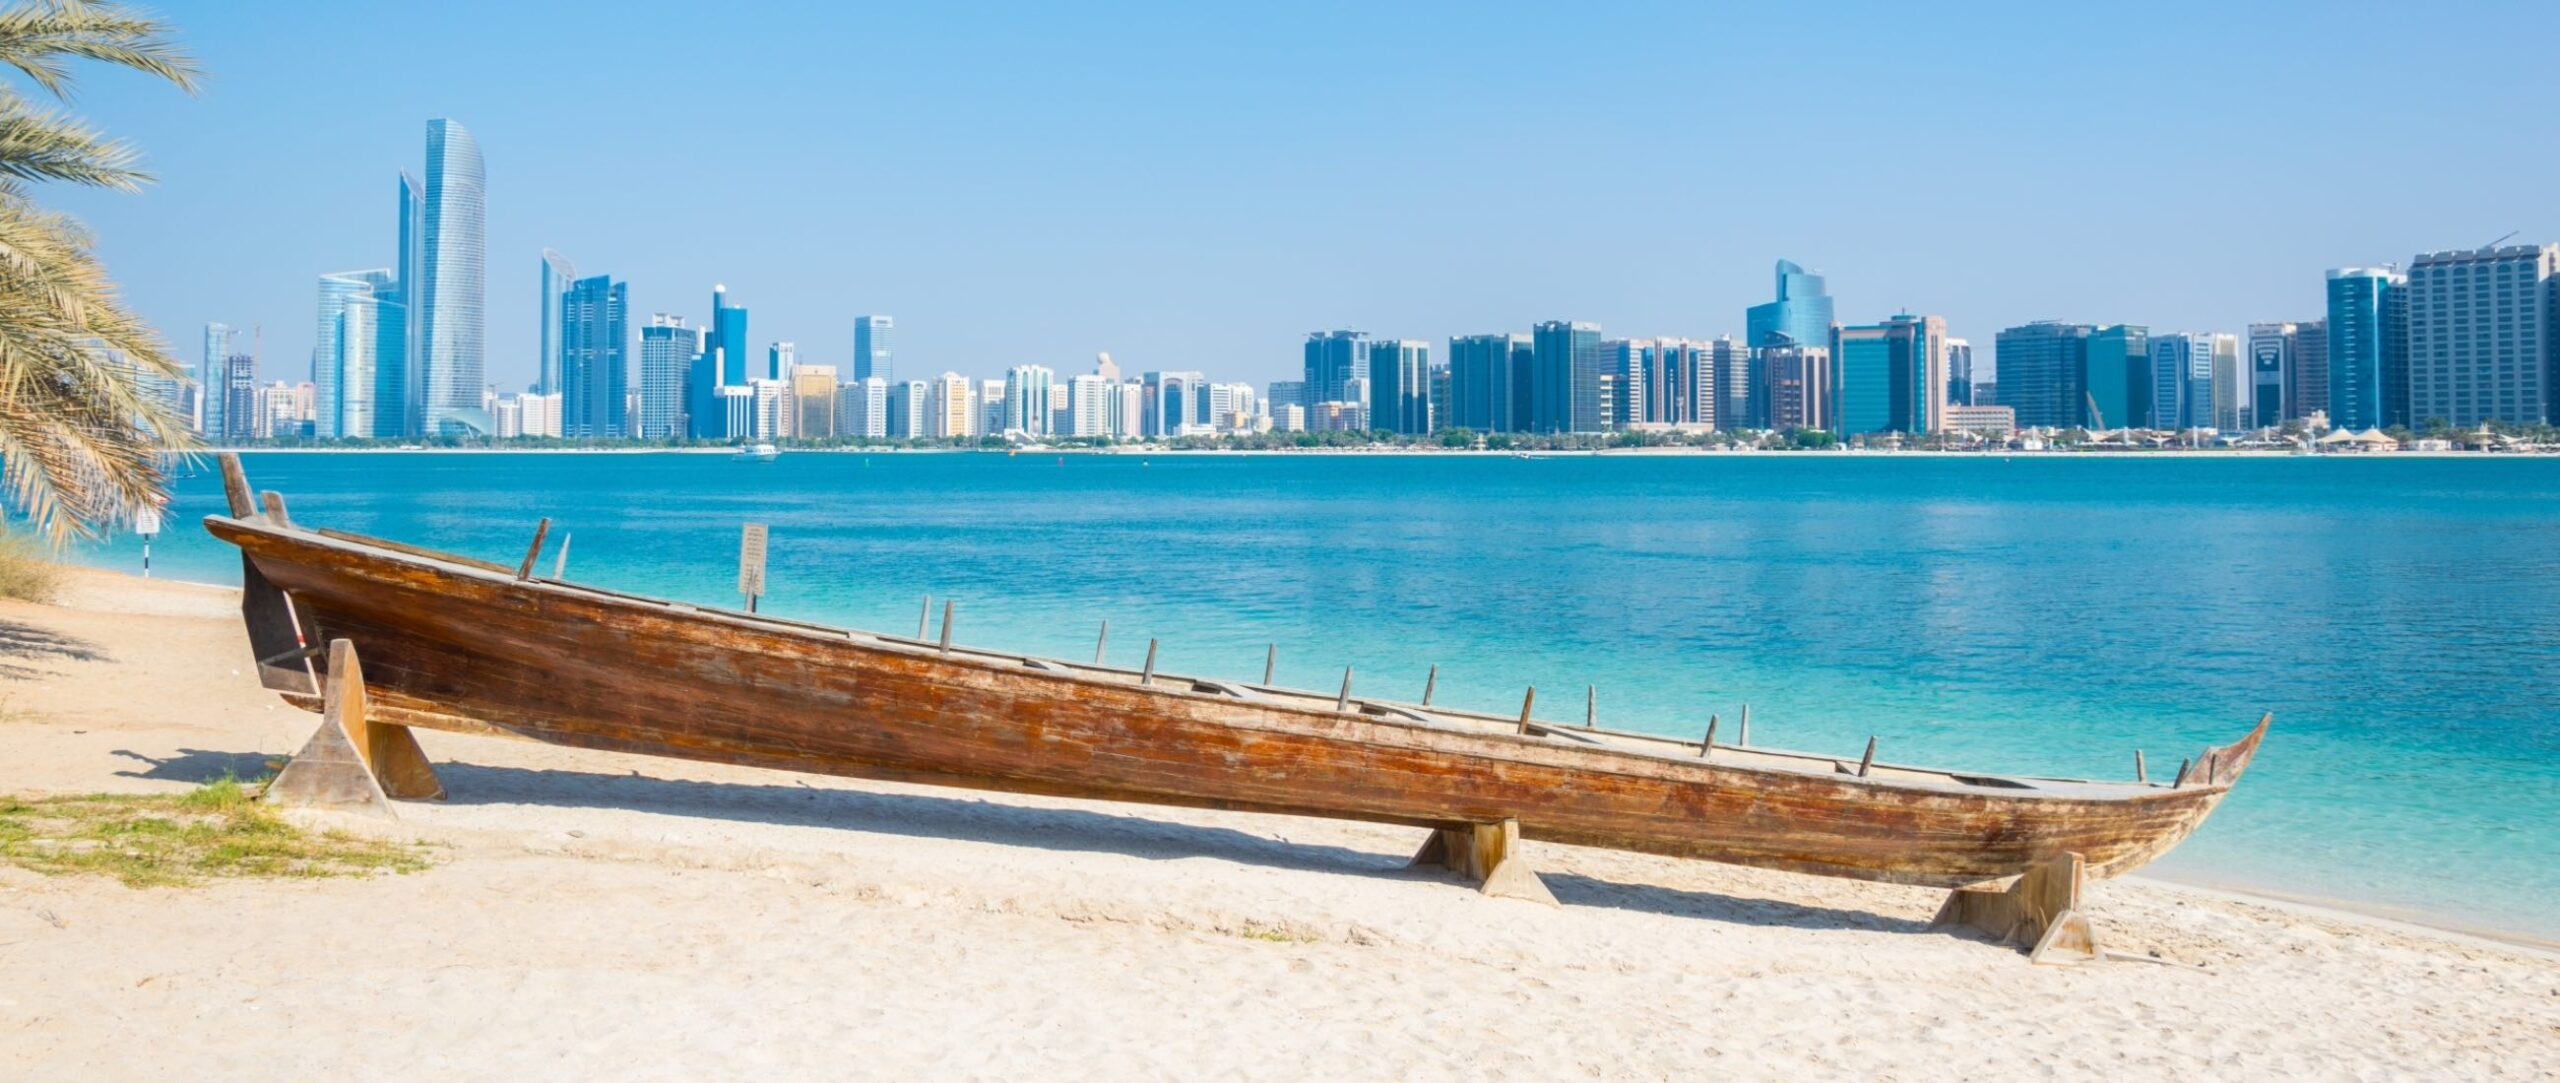 Abu Dhabi beach and wooden boat